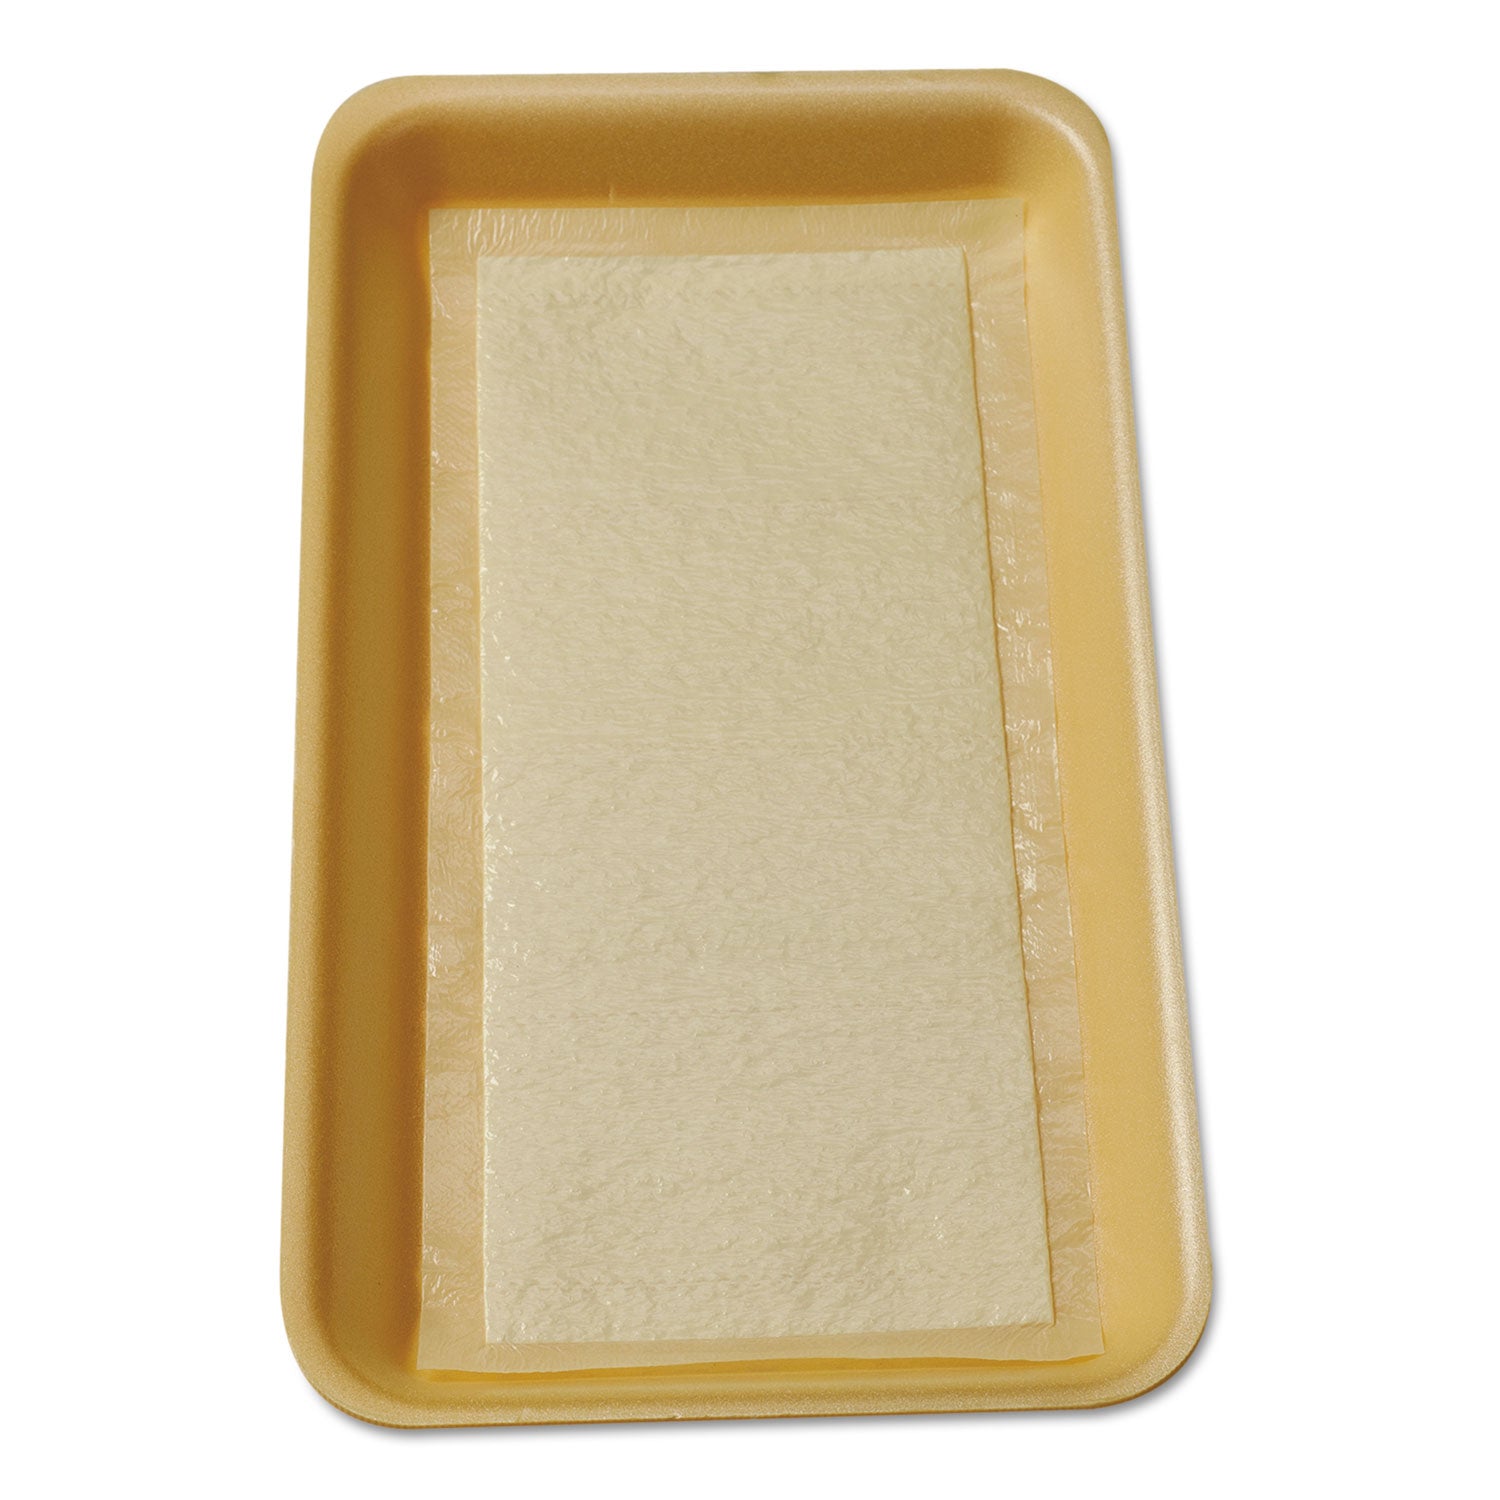 meat-tray-pads-6-x-45-white-yellow-paper-1000-carton_itrta1341108 - 1